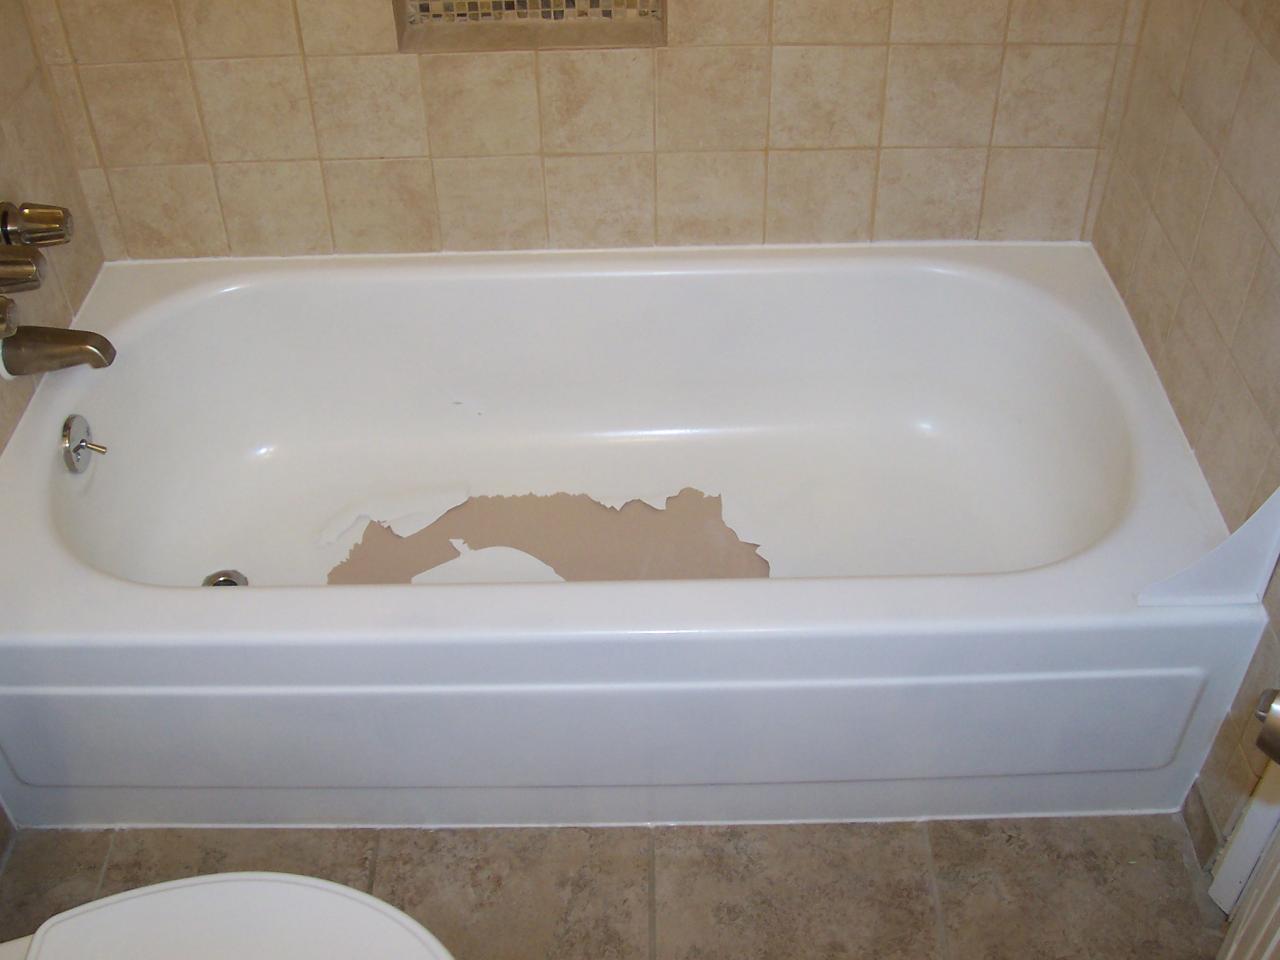 How Long Does It Take To Reglaze A Bathtub?